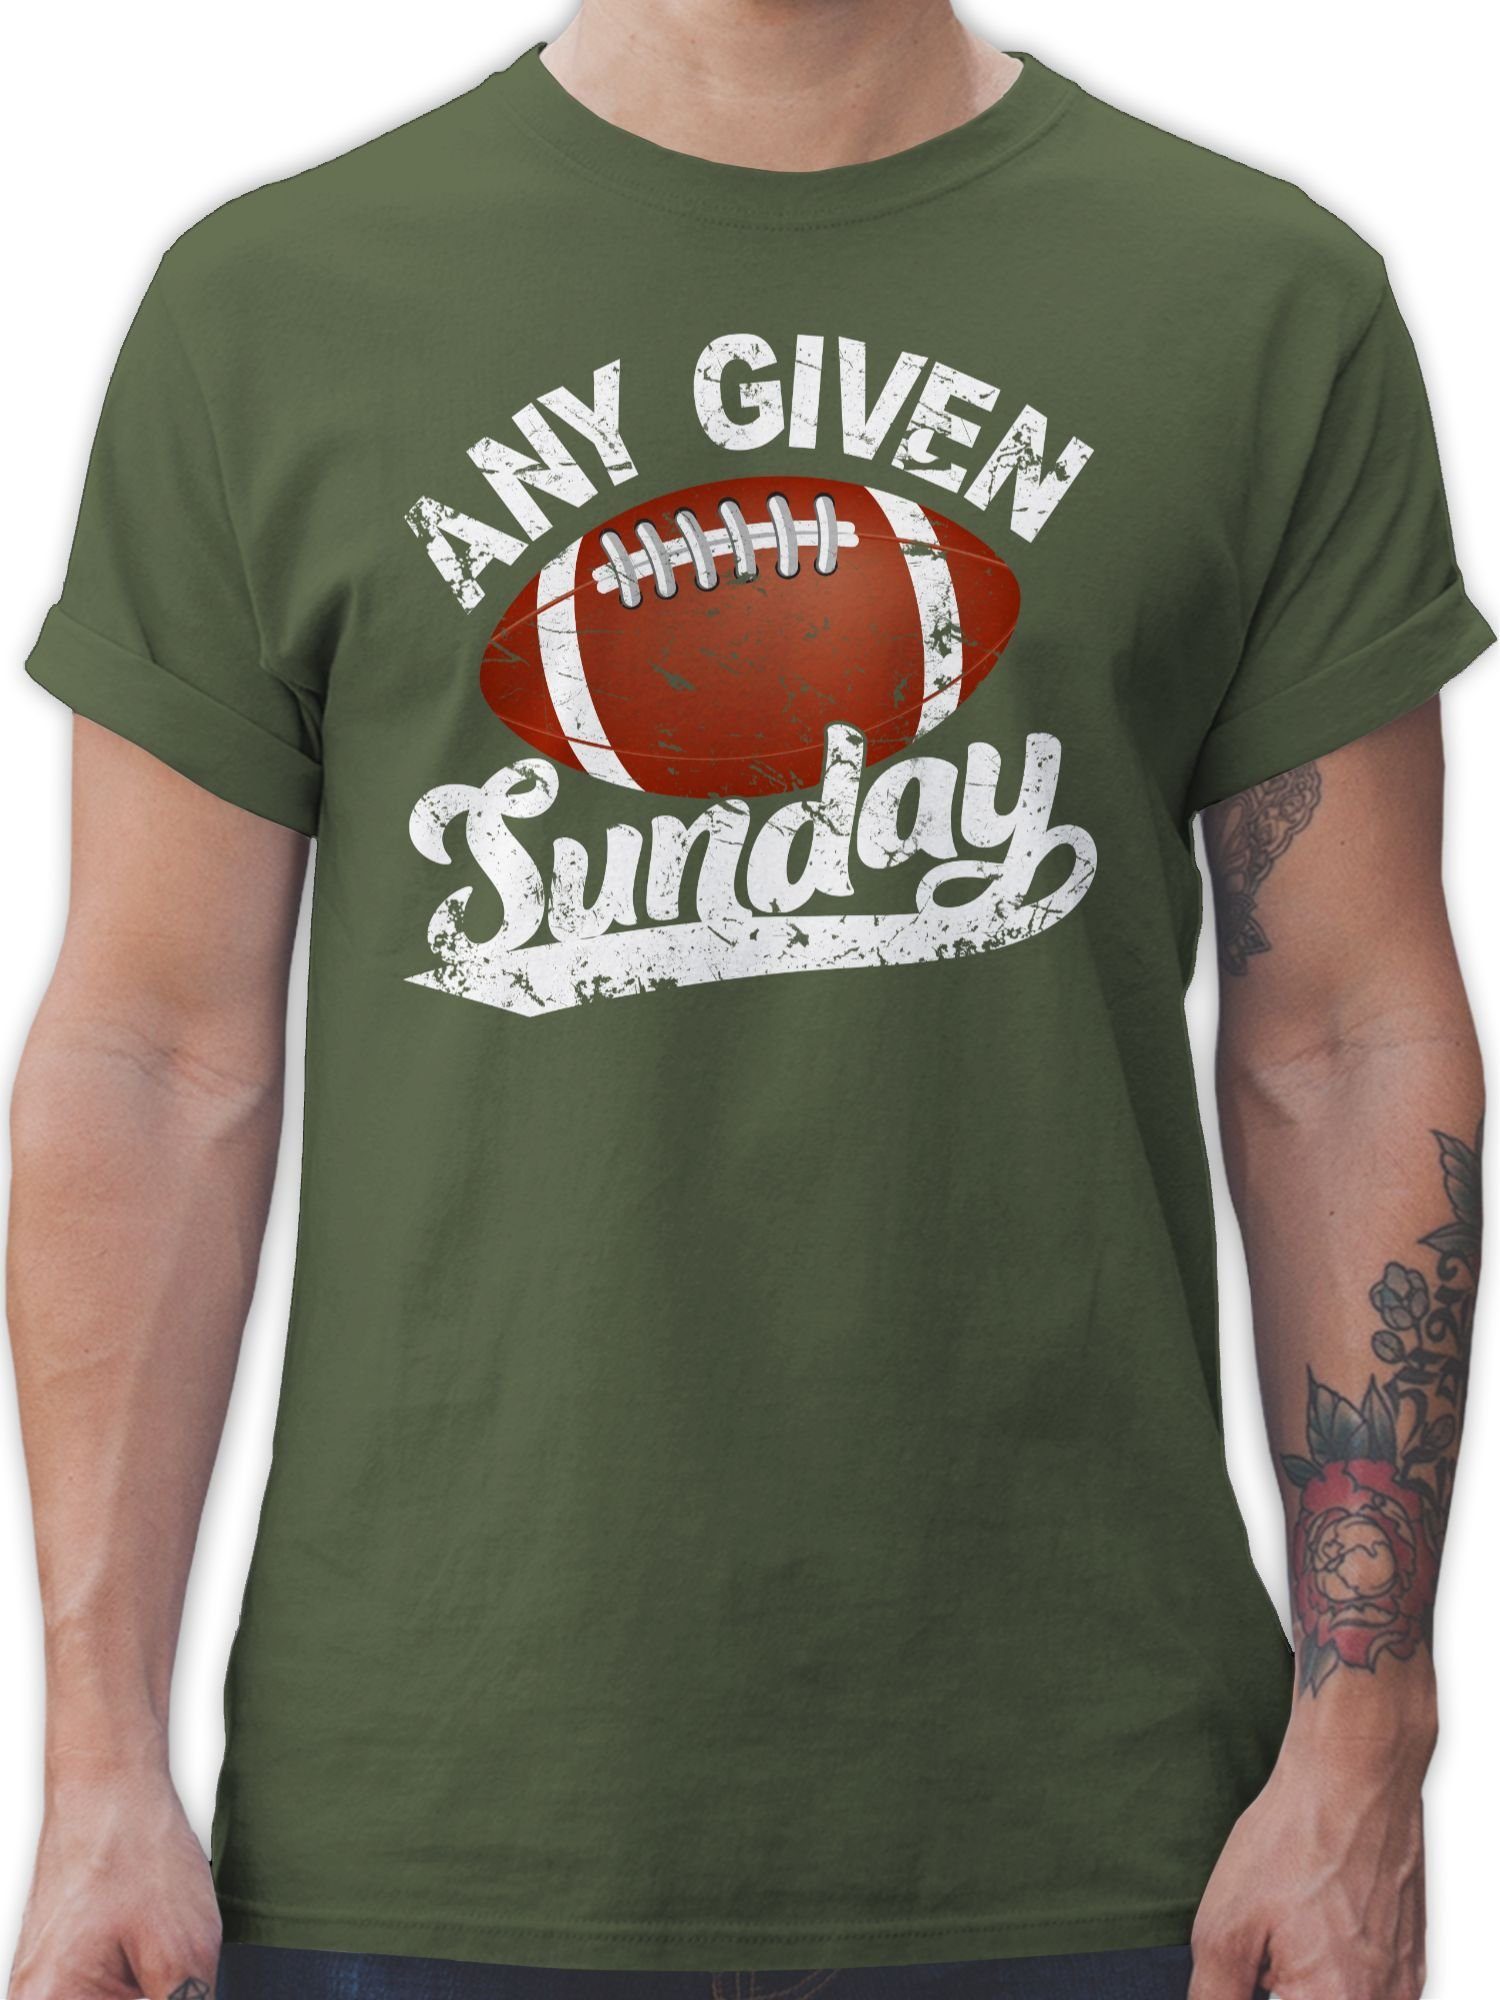 Shirtracer T-Shirt Any given Sunday mit Football weiß American Football NFL 03 Army Grün